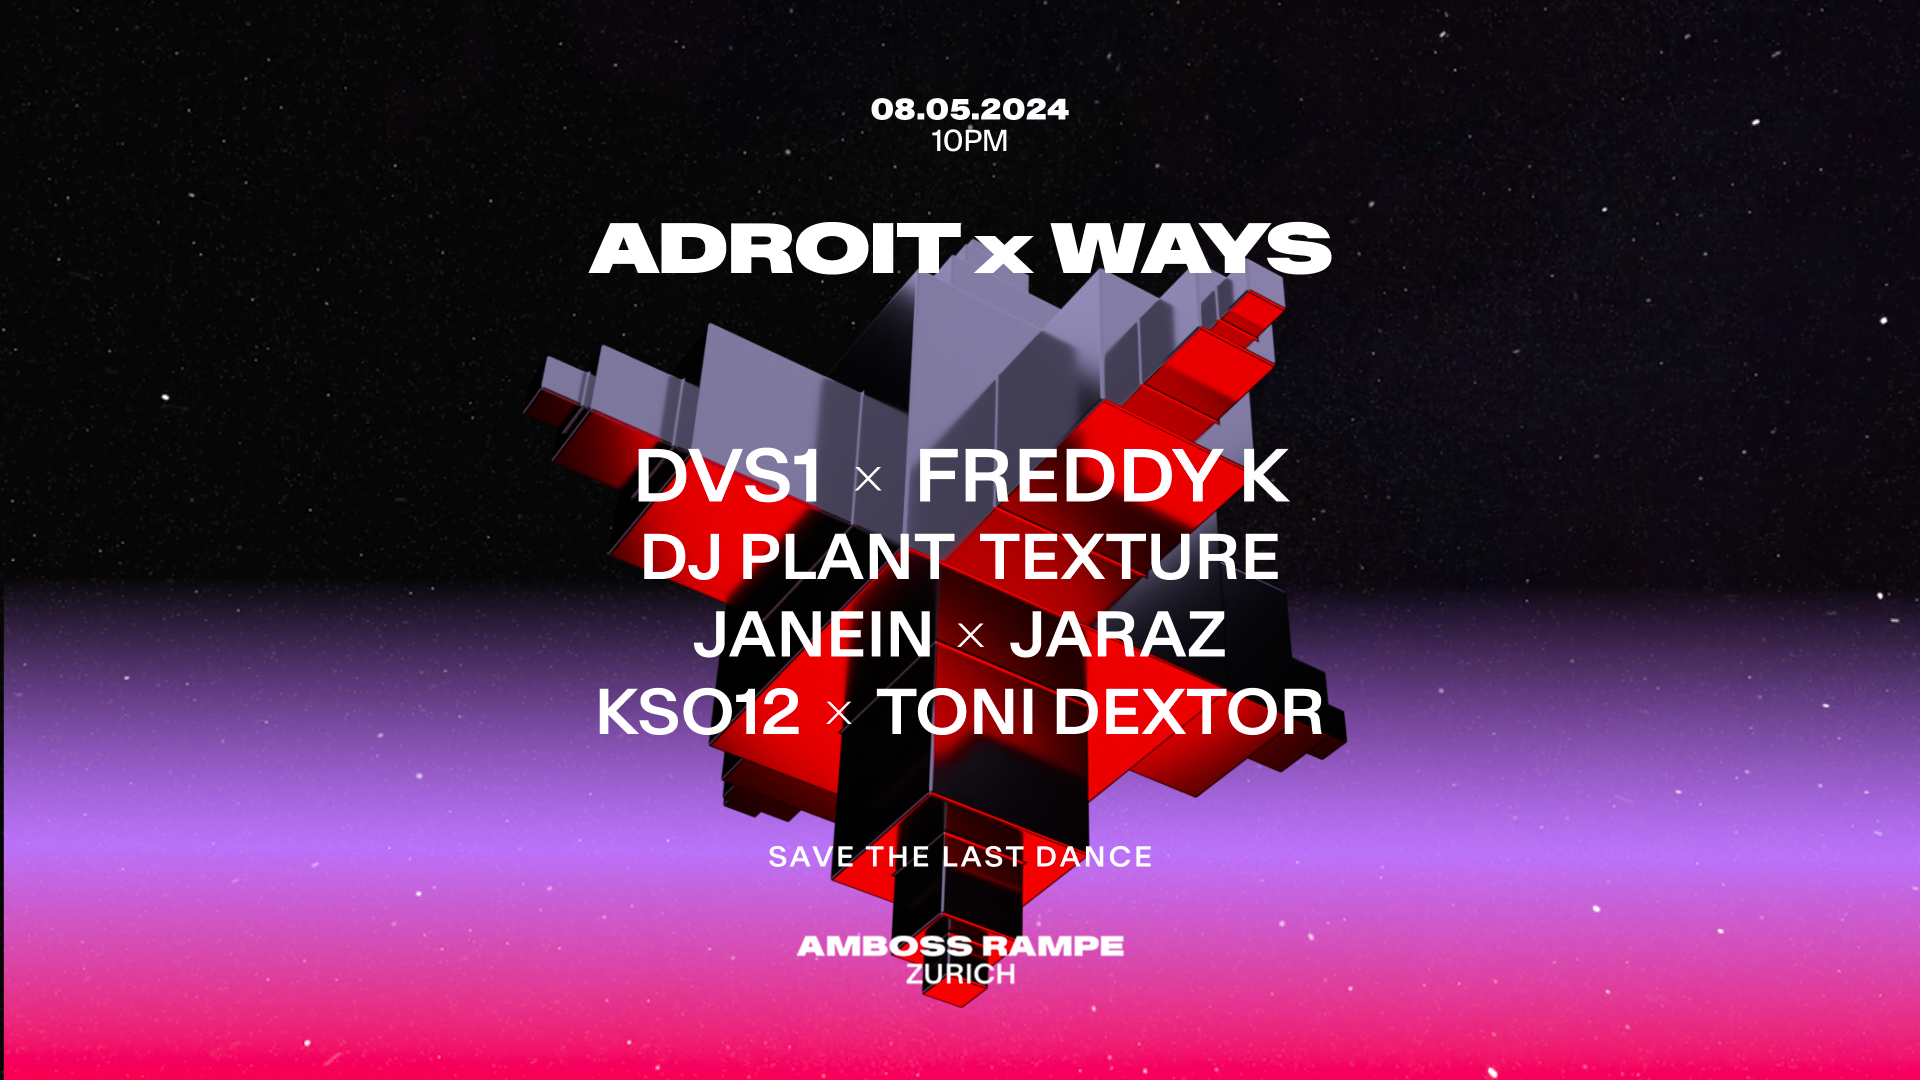 Adroit x Ways with DVS1 & Freddy K - フライヤー表